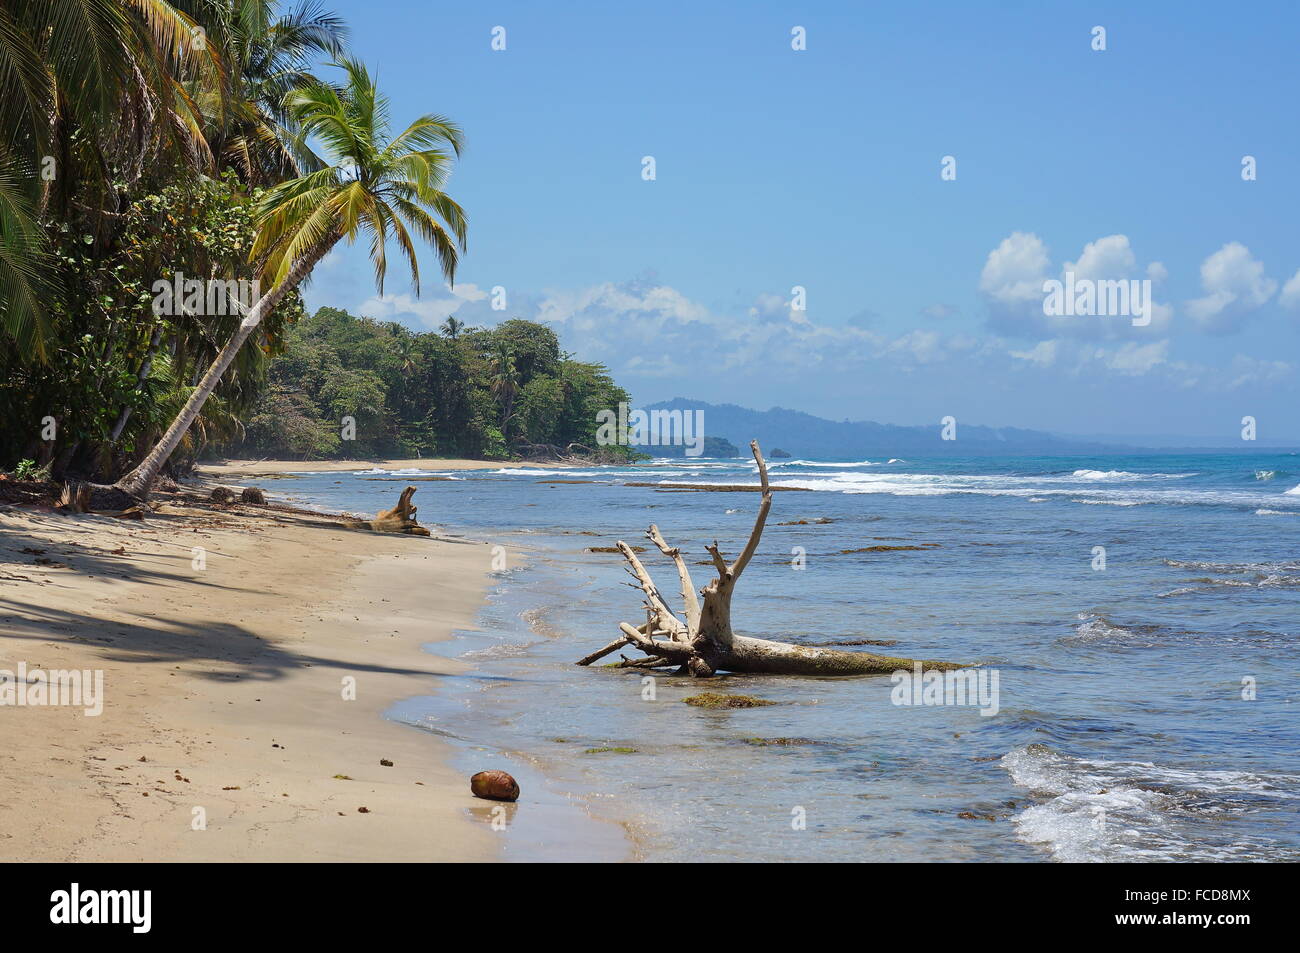 Wild Caribe de Costa Rica, Playa Chiquita, Puerto Viejo de Talamanca Foto de stock